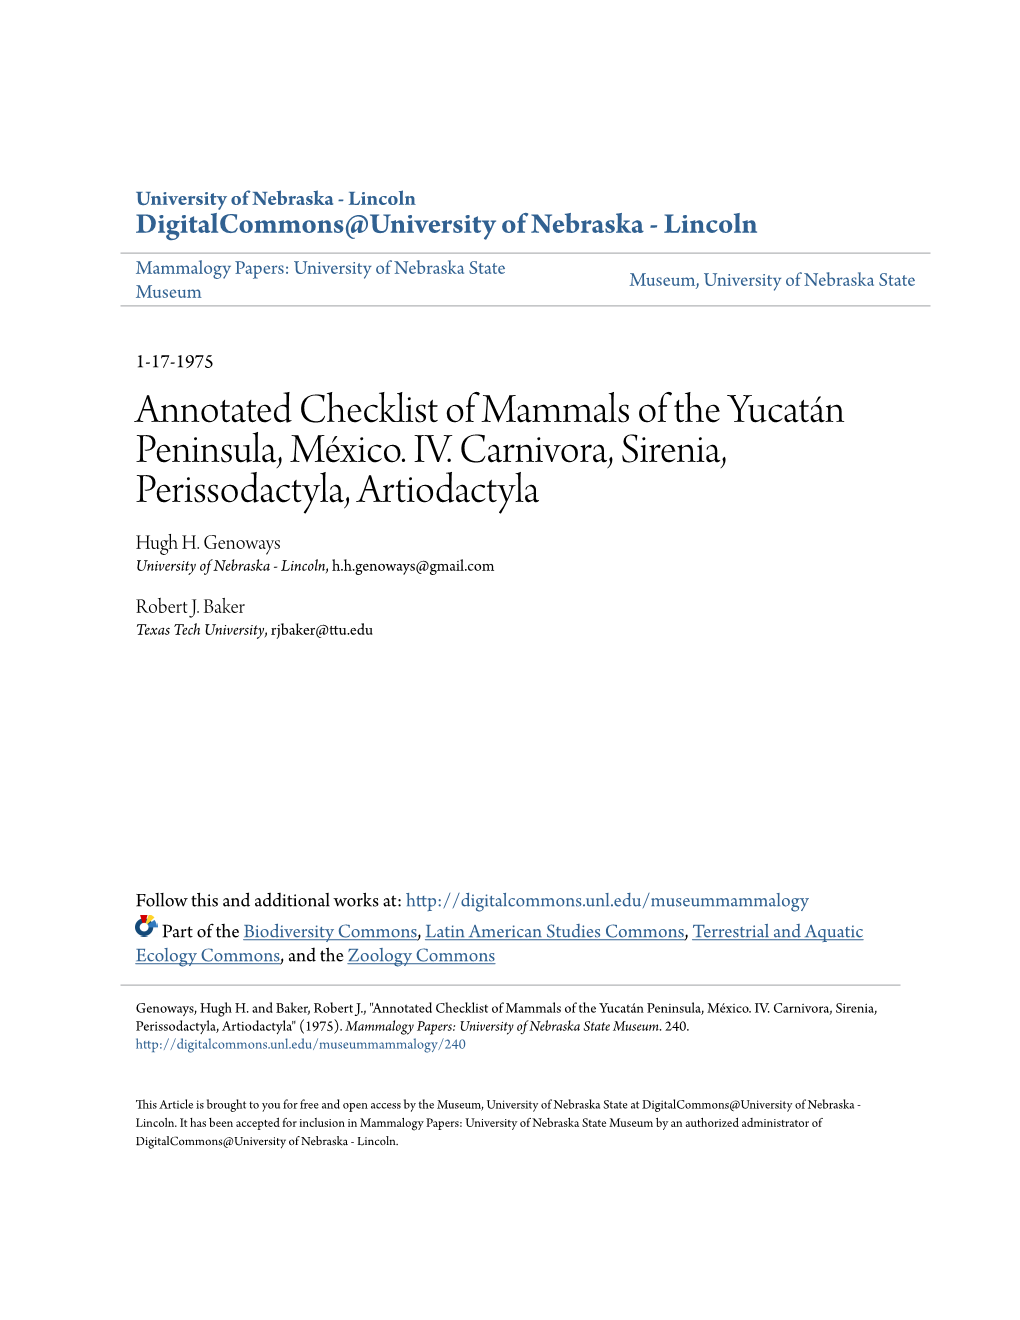 Annotated Checklist of Mammals of the Yucatán Peninsula, México. IV